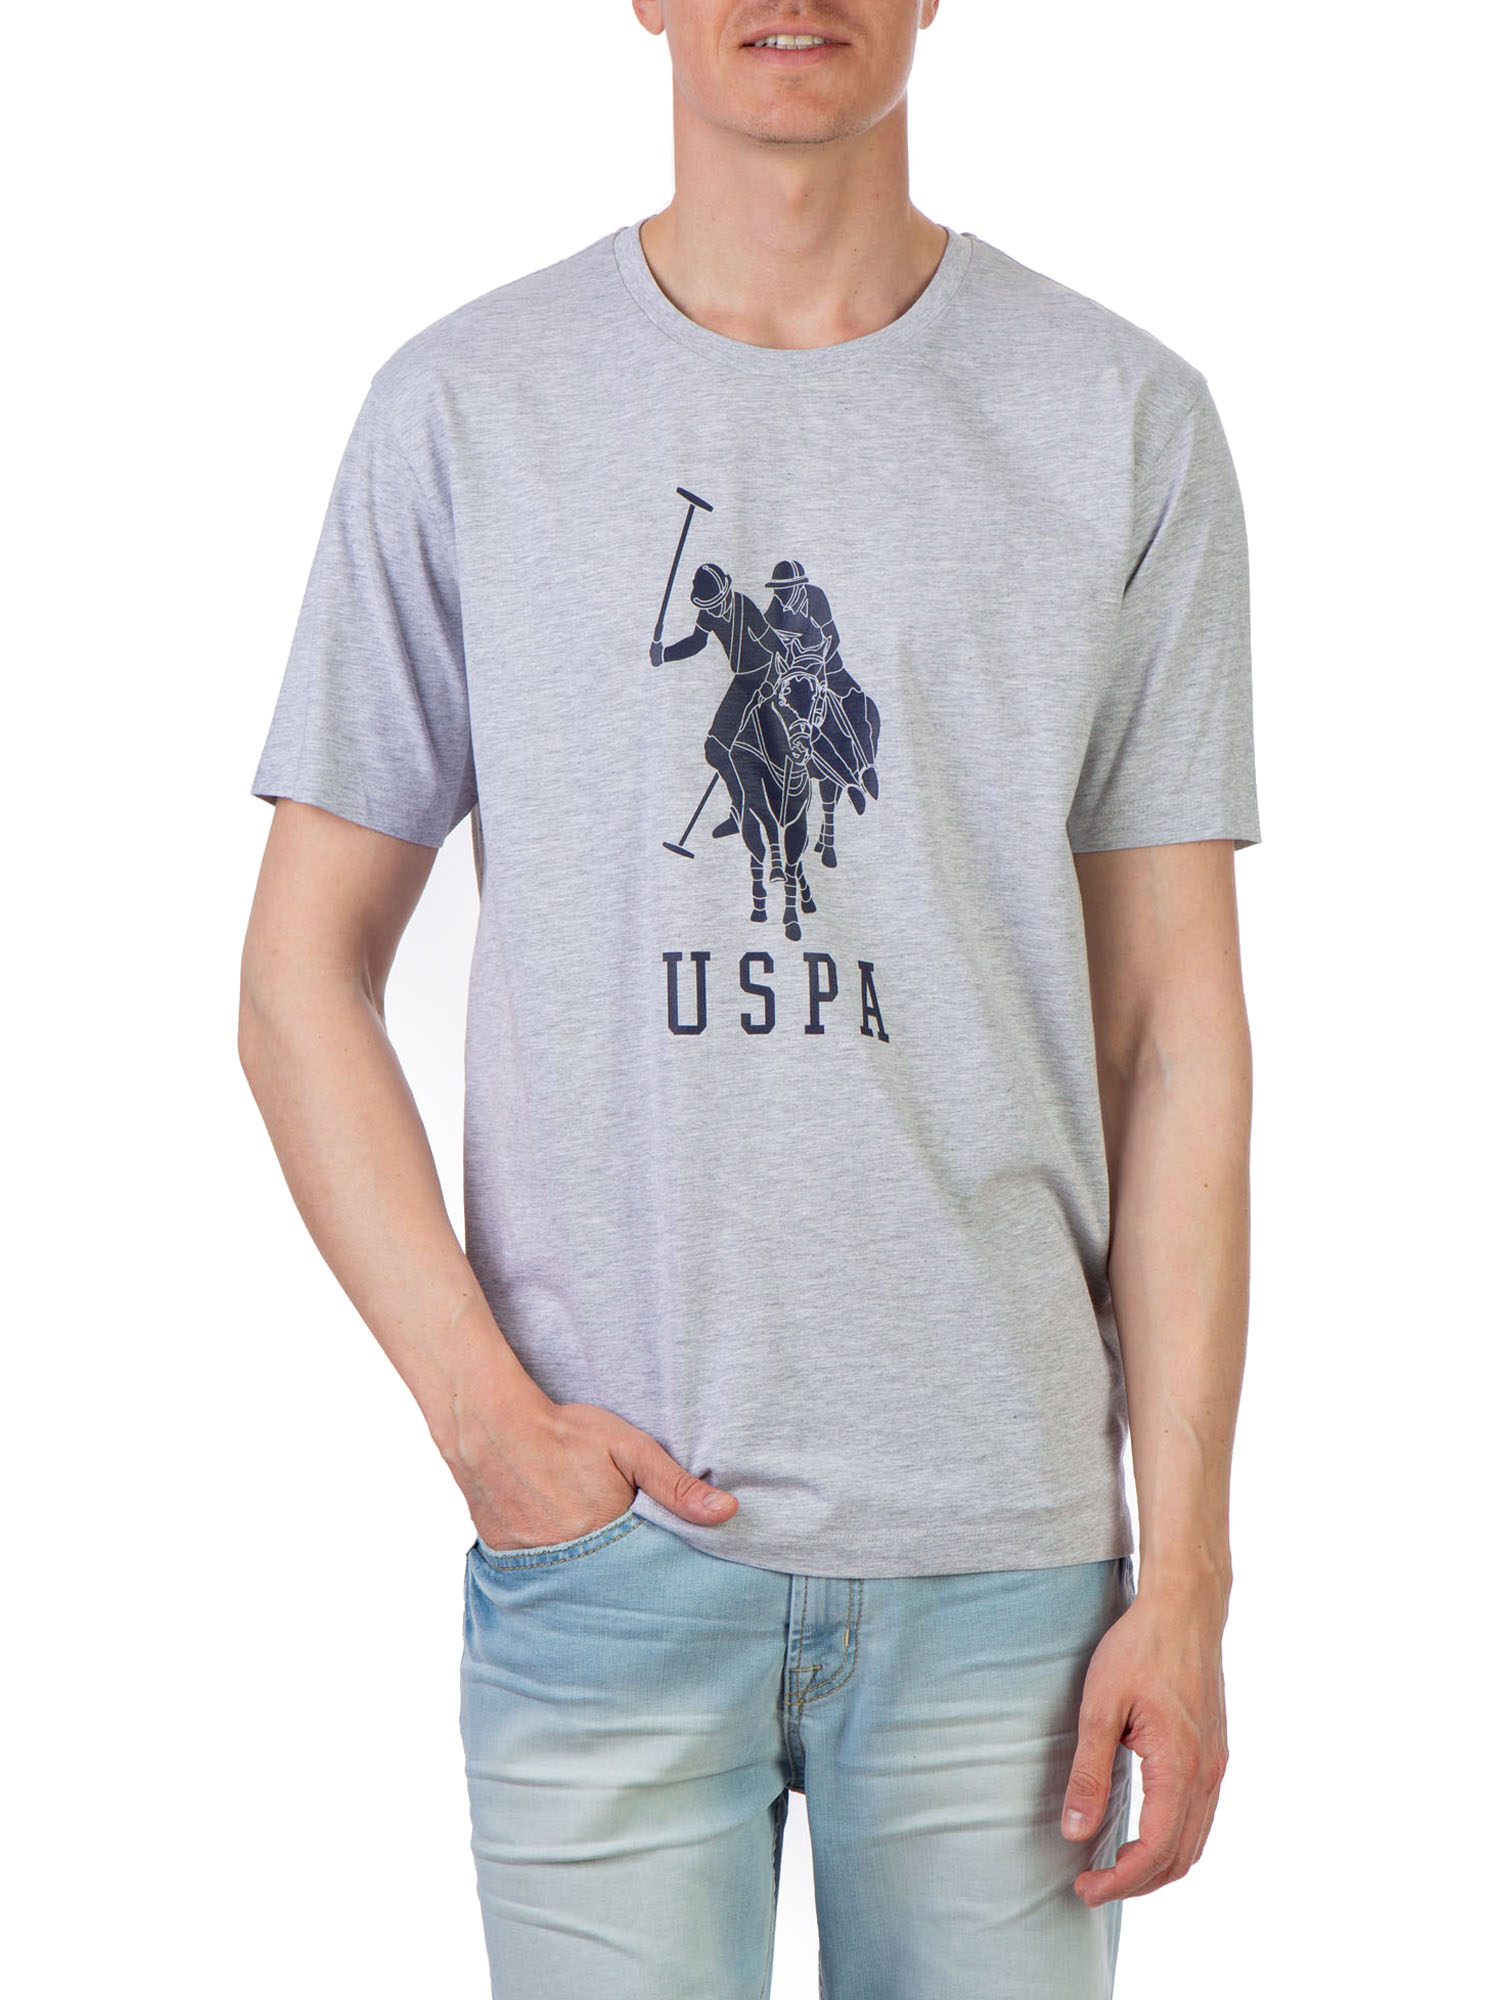 U.S. Polo Assn. Men's Short Sleeve Graphic Jersey T-Shirt - image 1 of 3